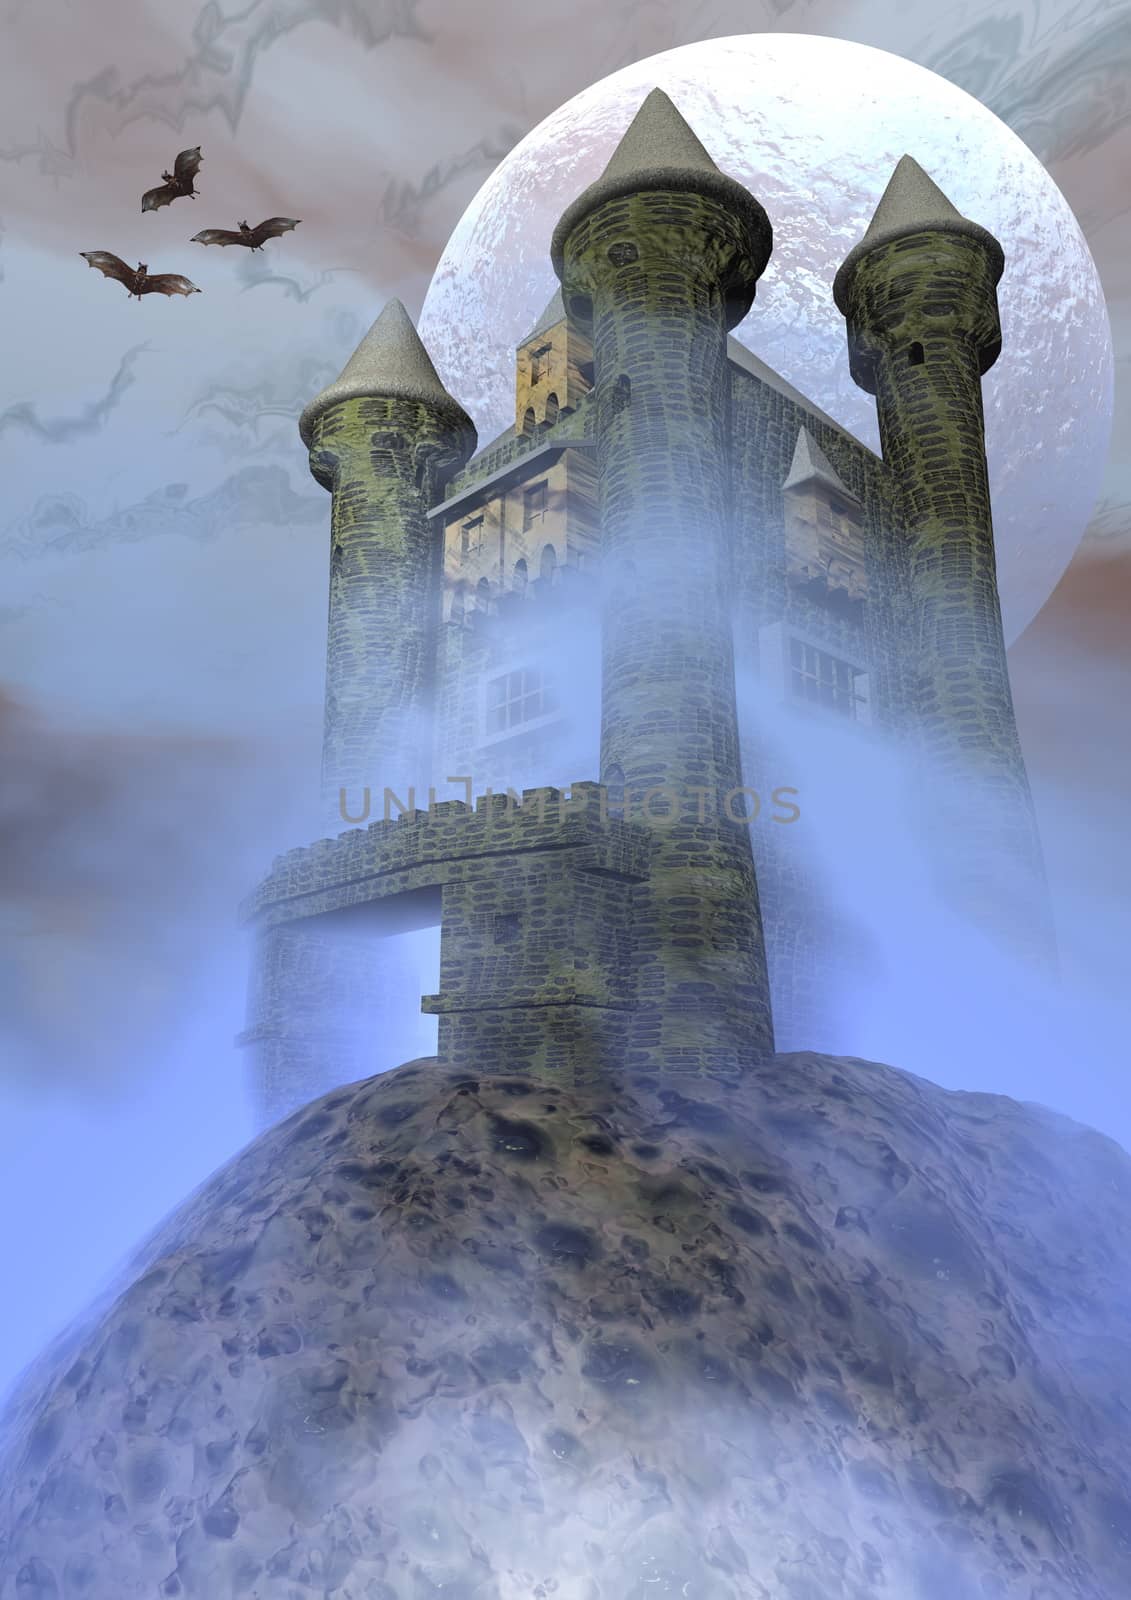 Odd castle - 3D render by Elenaphotos21